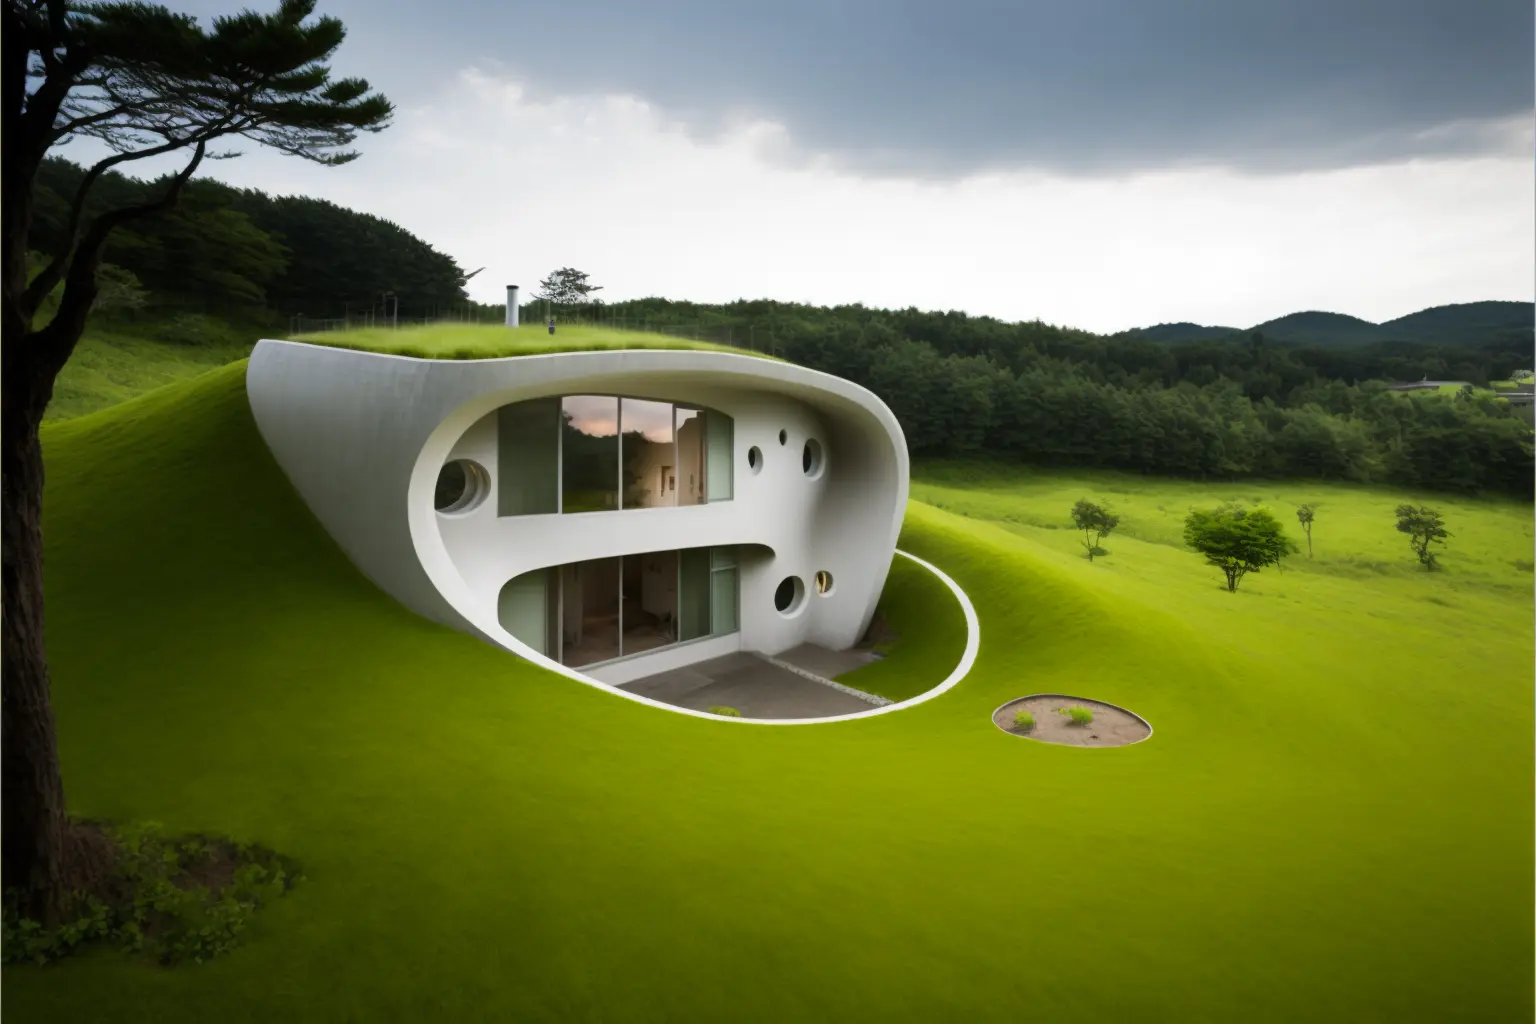 organic house embedded into a grassy hill, designed by Kazuyo Sejima and Ryue Nishizawa, architectural photography, style of archillect, futurism, modernist architecture